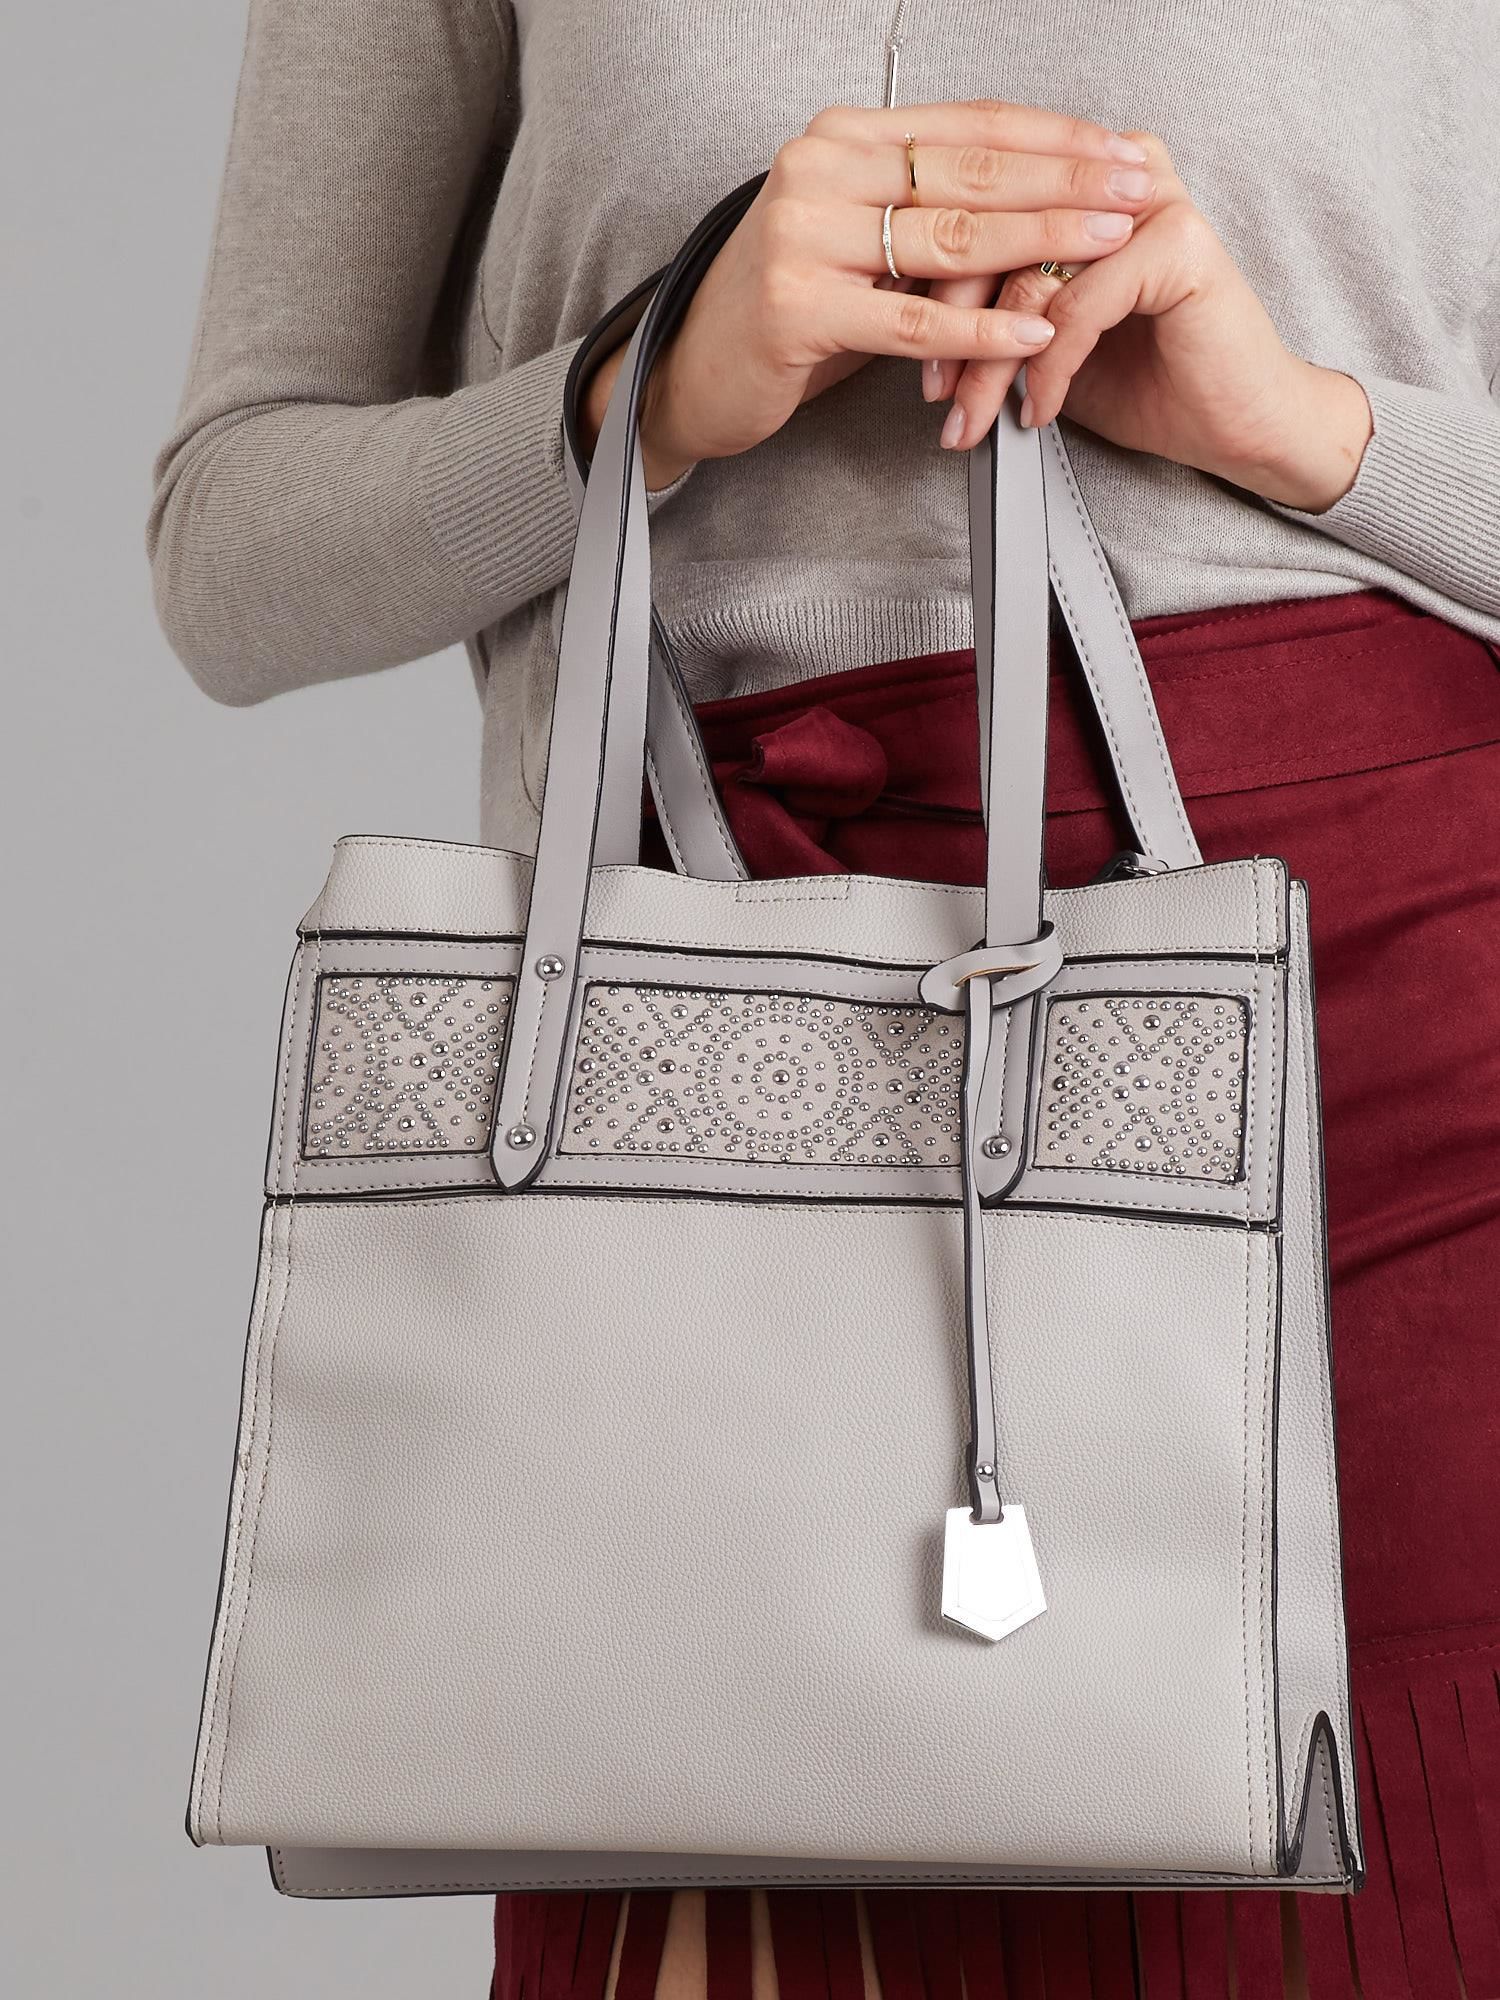 Elegantná sivá kabelka so vzorom